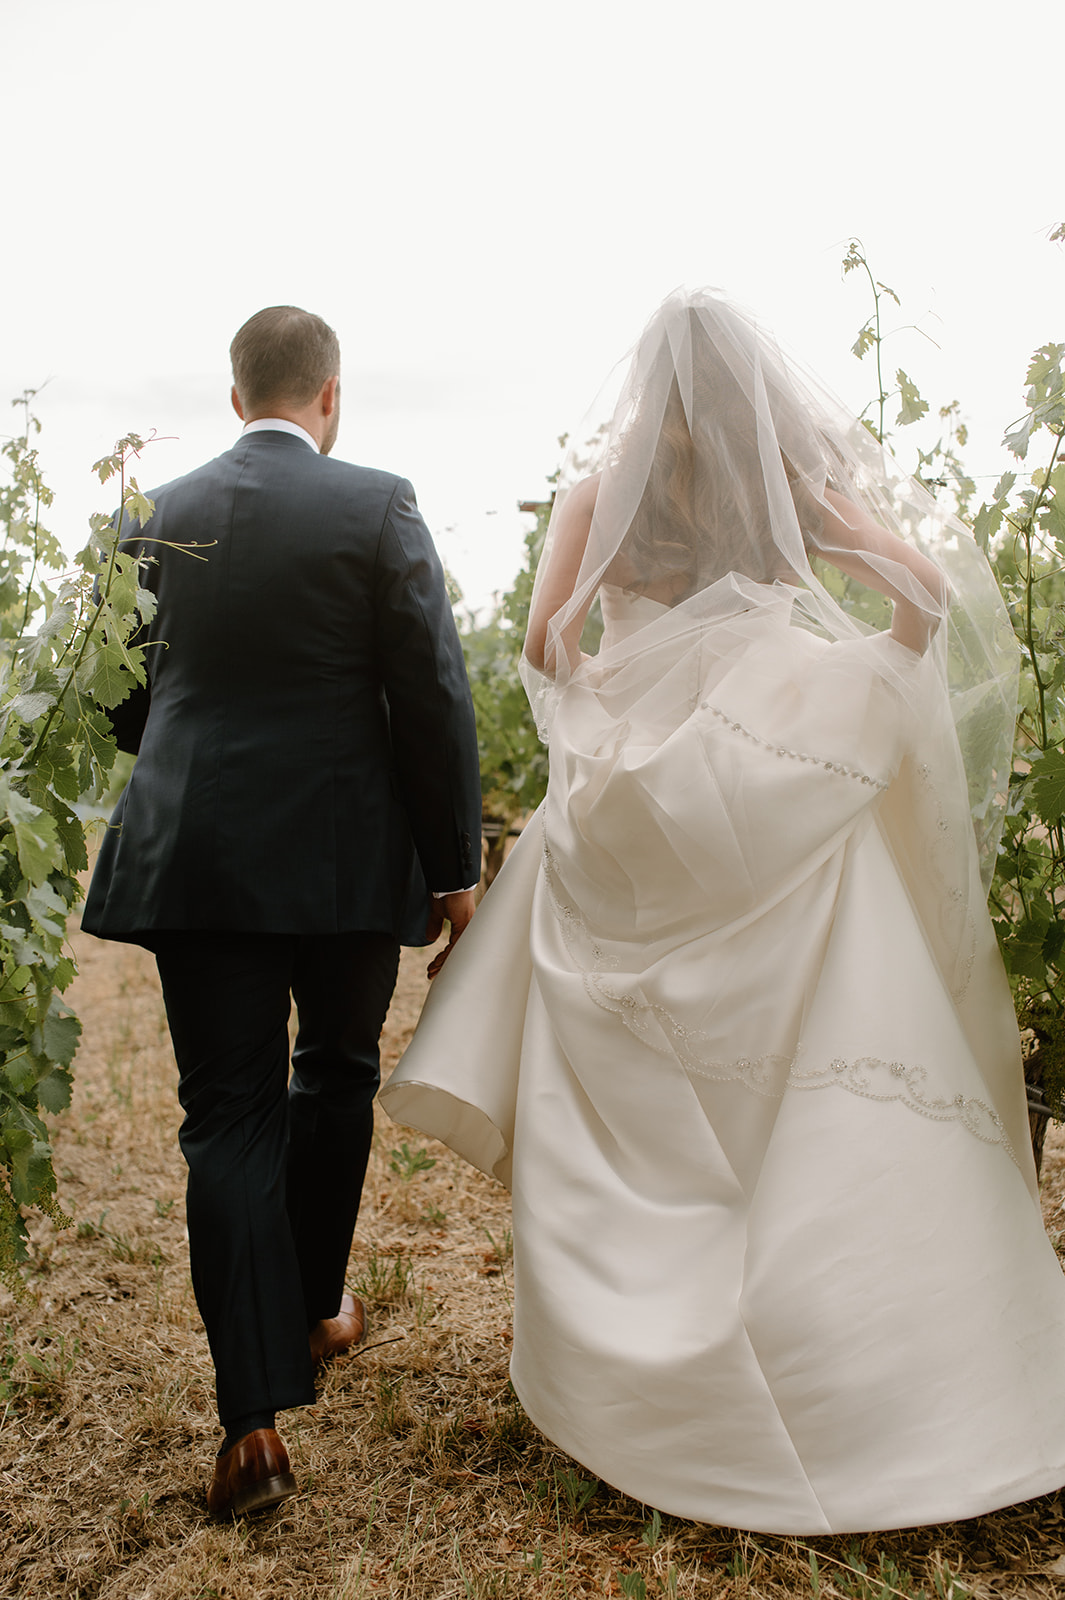 Sydney Jai Photography - Napa Valley Wedding Photographer, bride and groom photos, winery wedding venue, vineyard wedding venue